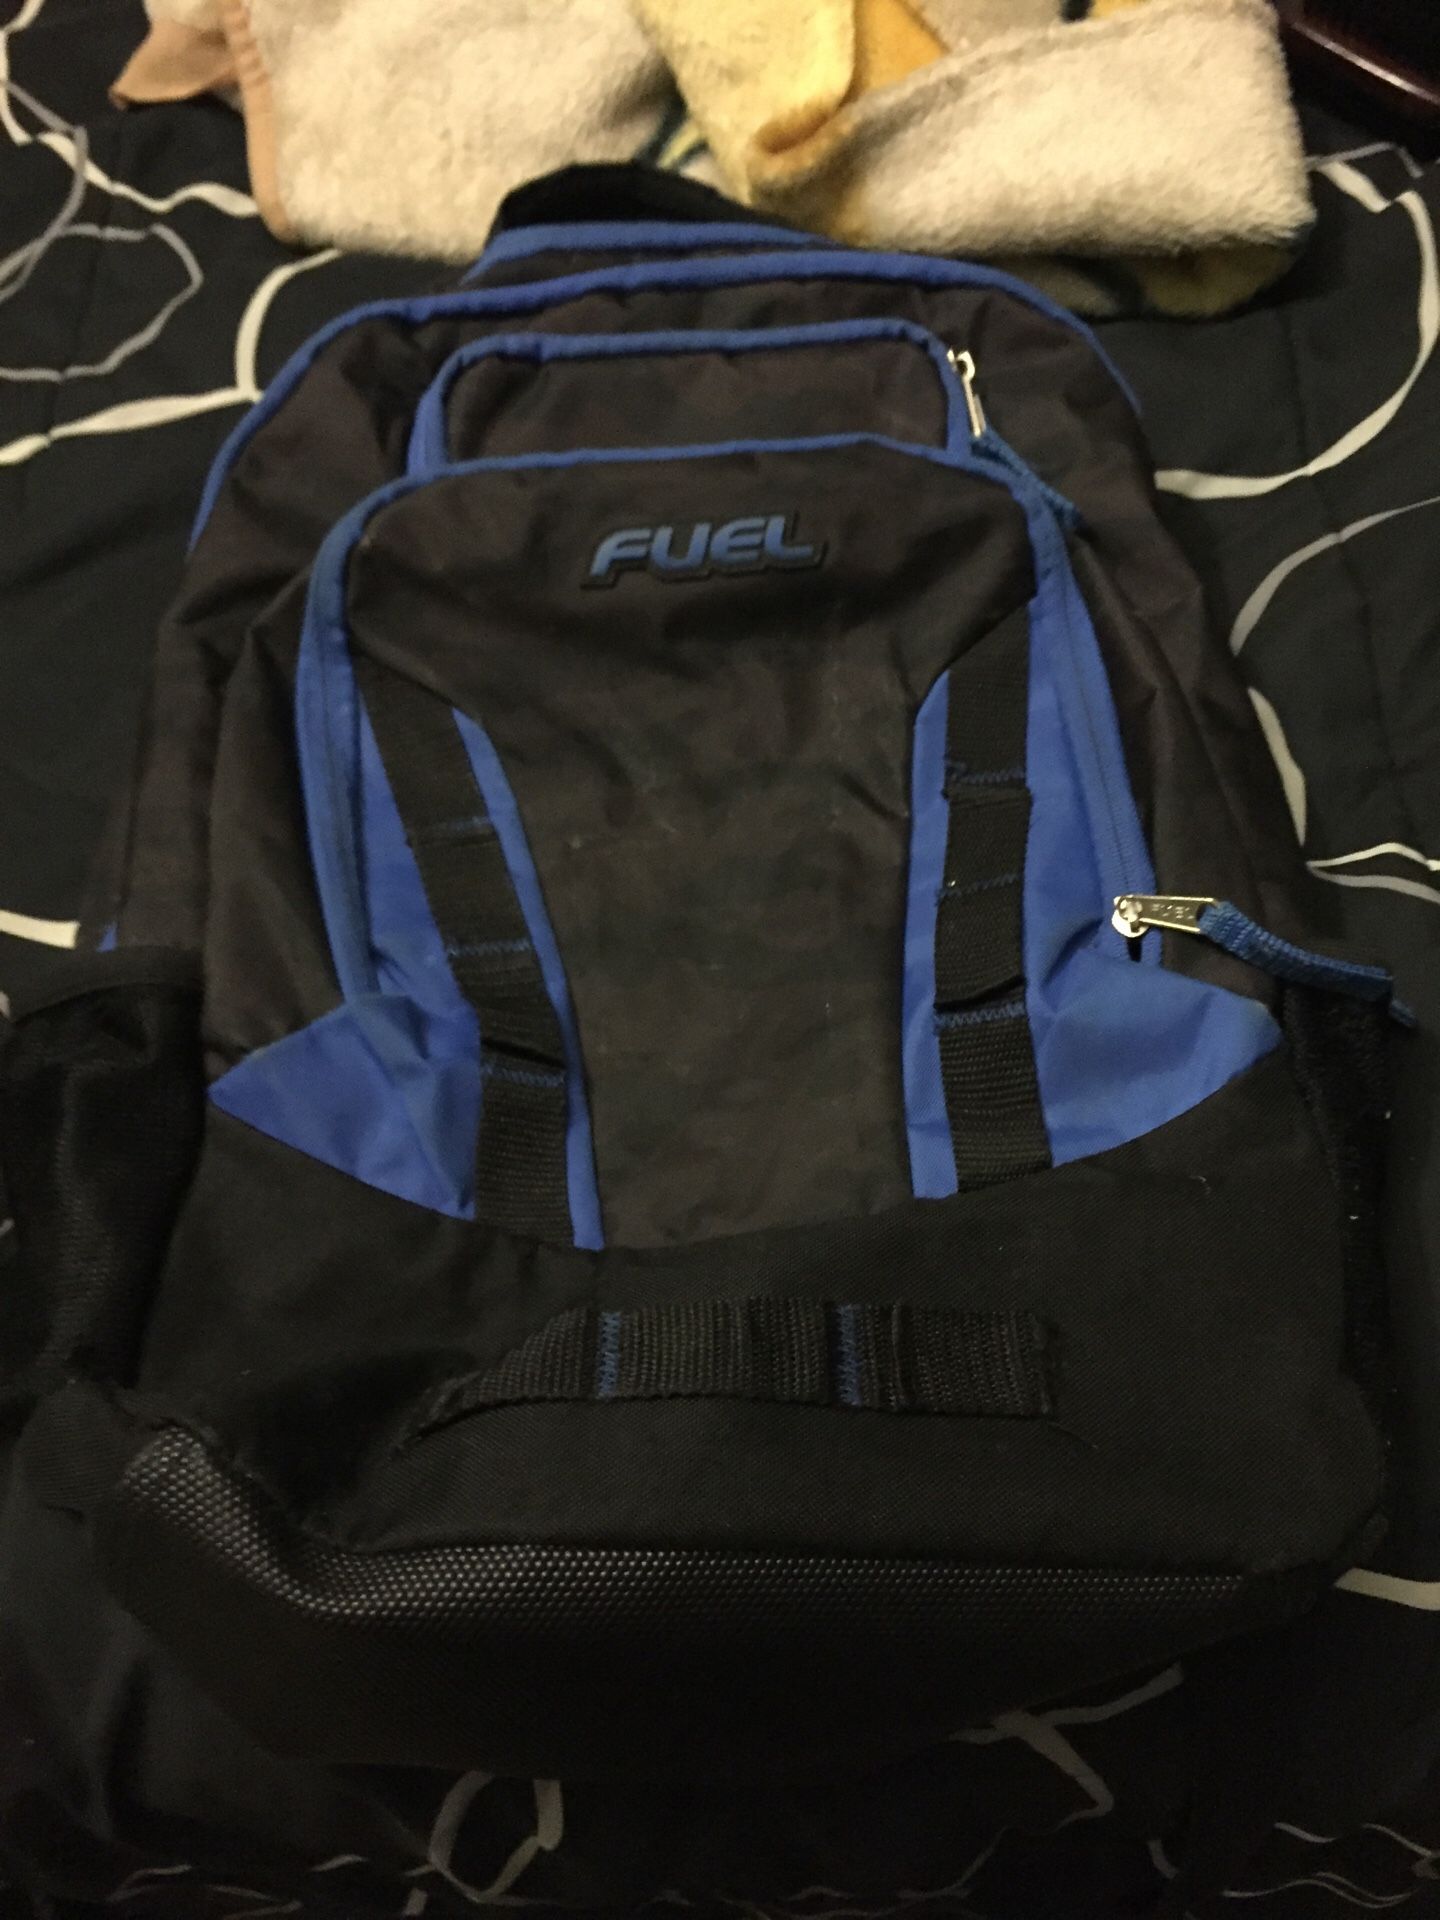 Nice backpack